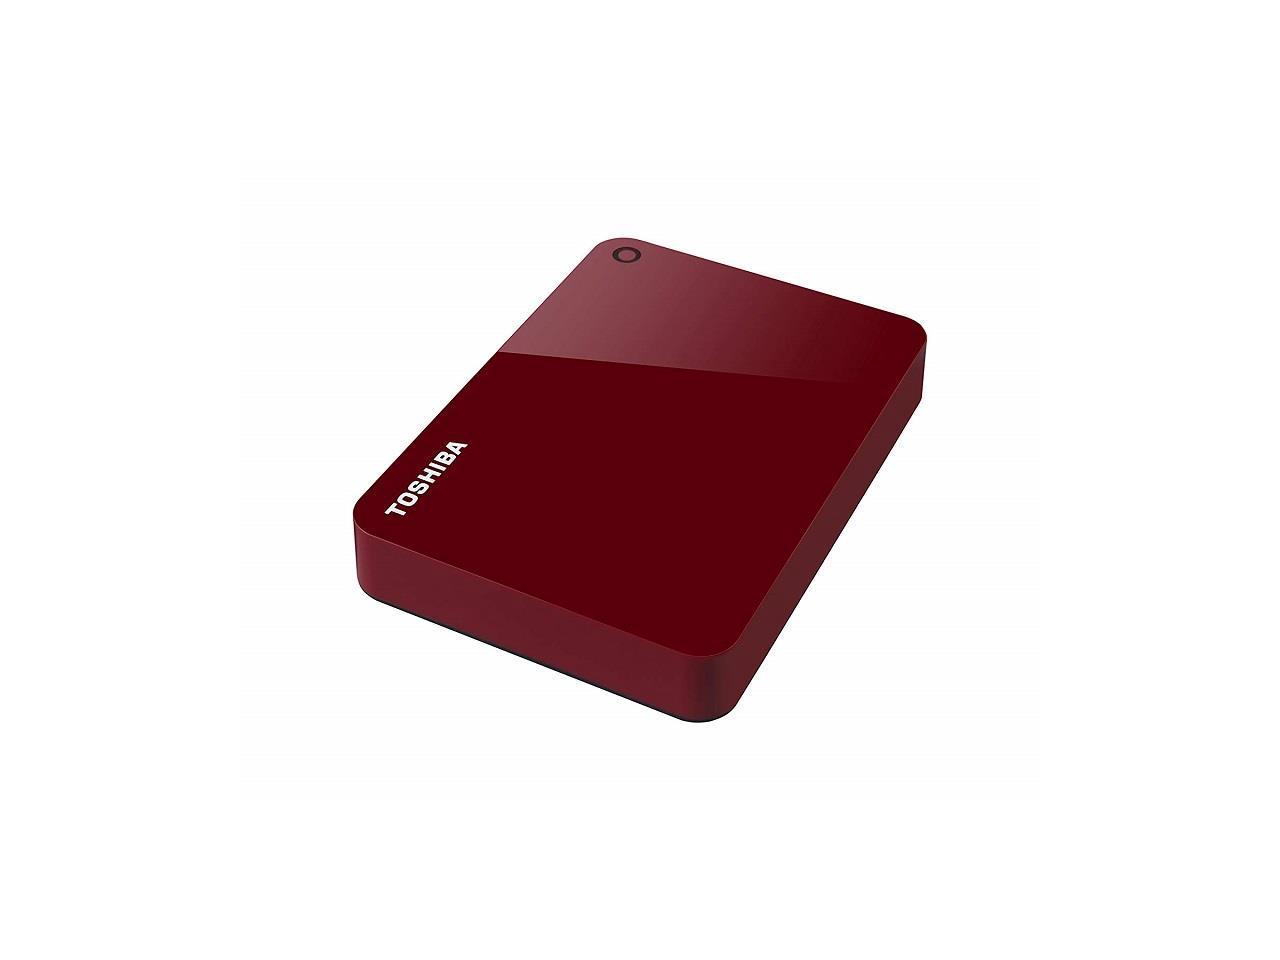 Toshiba Canvio Advance 4TB Portable External Hard Drive USB 3.0 Red HDTC940XR3CA